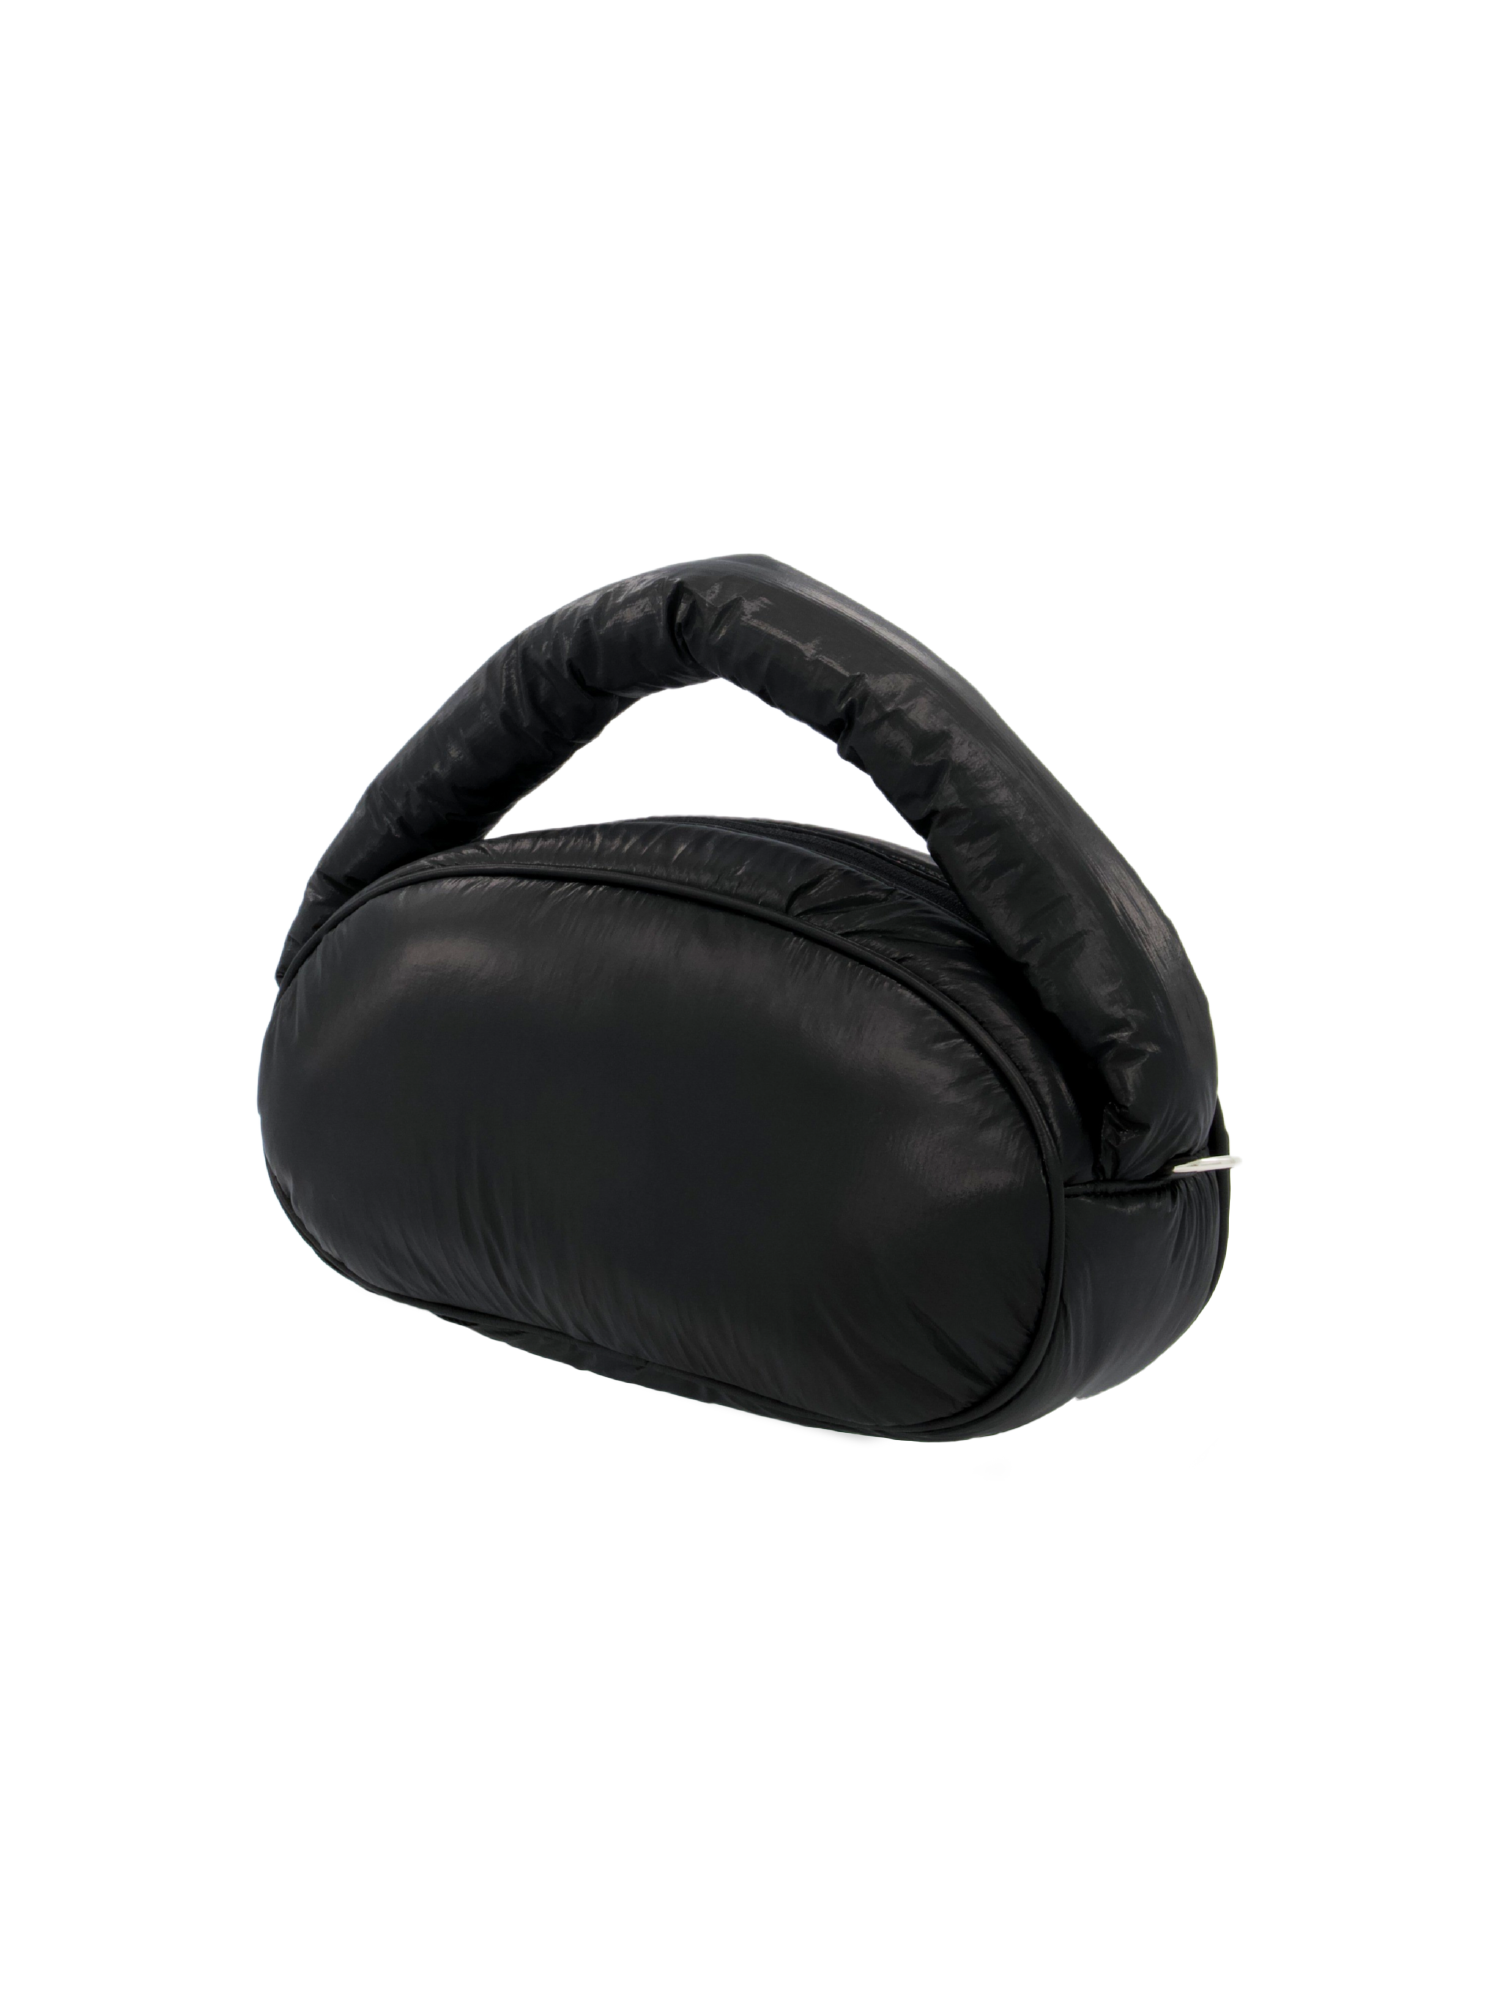 Puff-Up Bag - Black/Fuchsia